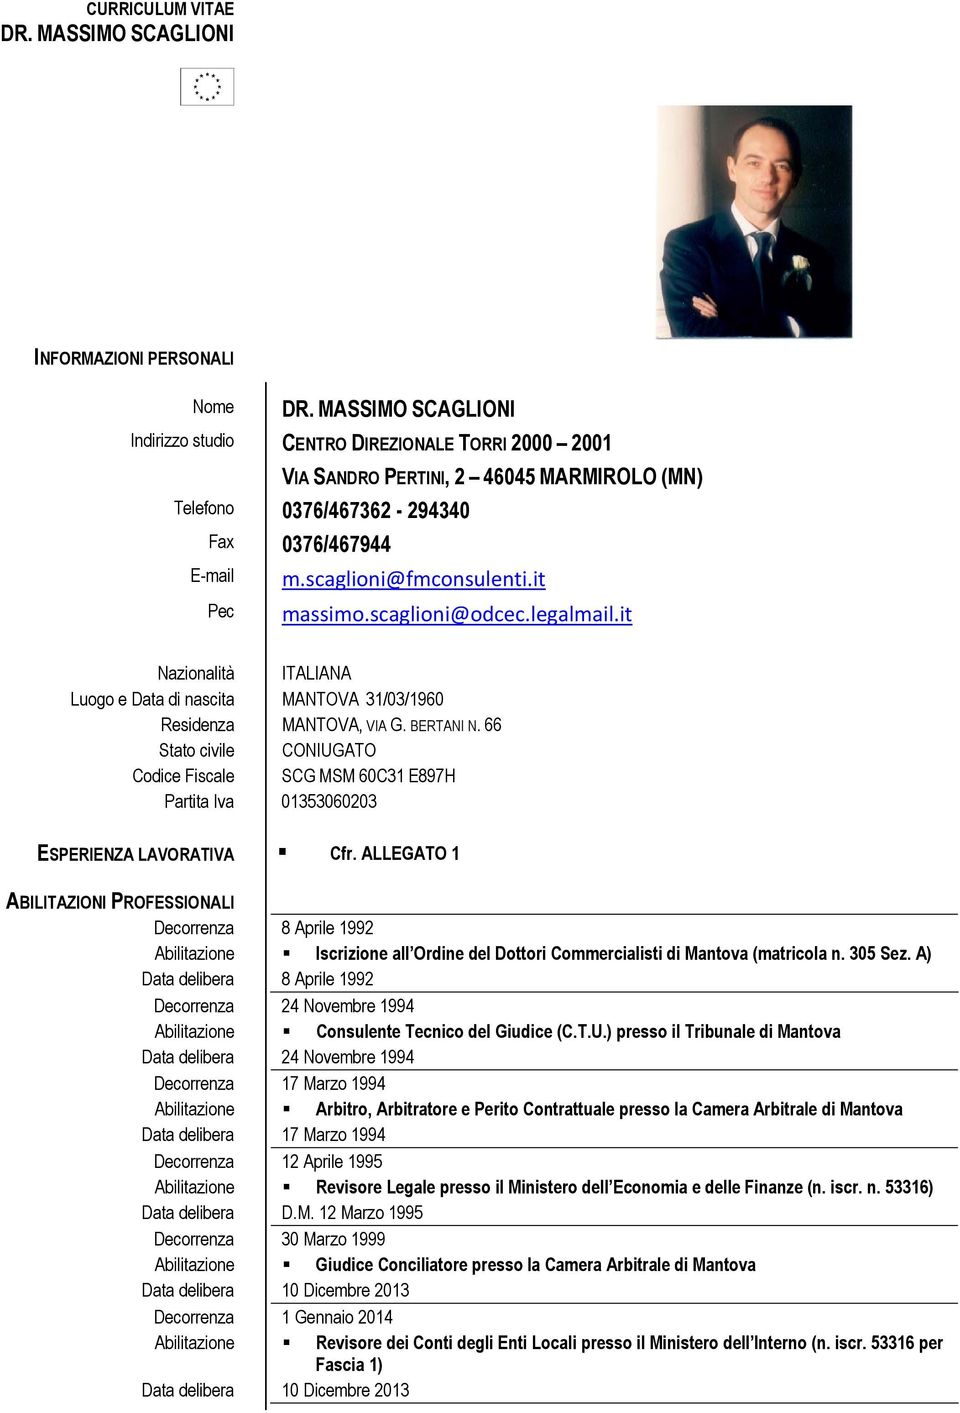 it Pec massimo.scaglioni@odcec.legalmail.it Nazionalità ITALIANA Luogo e Data di nascita MANTOVA 31/03/1960 Residenza MANTOVA, VIA G. BERTANI N.